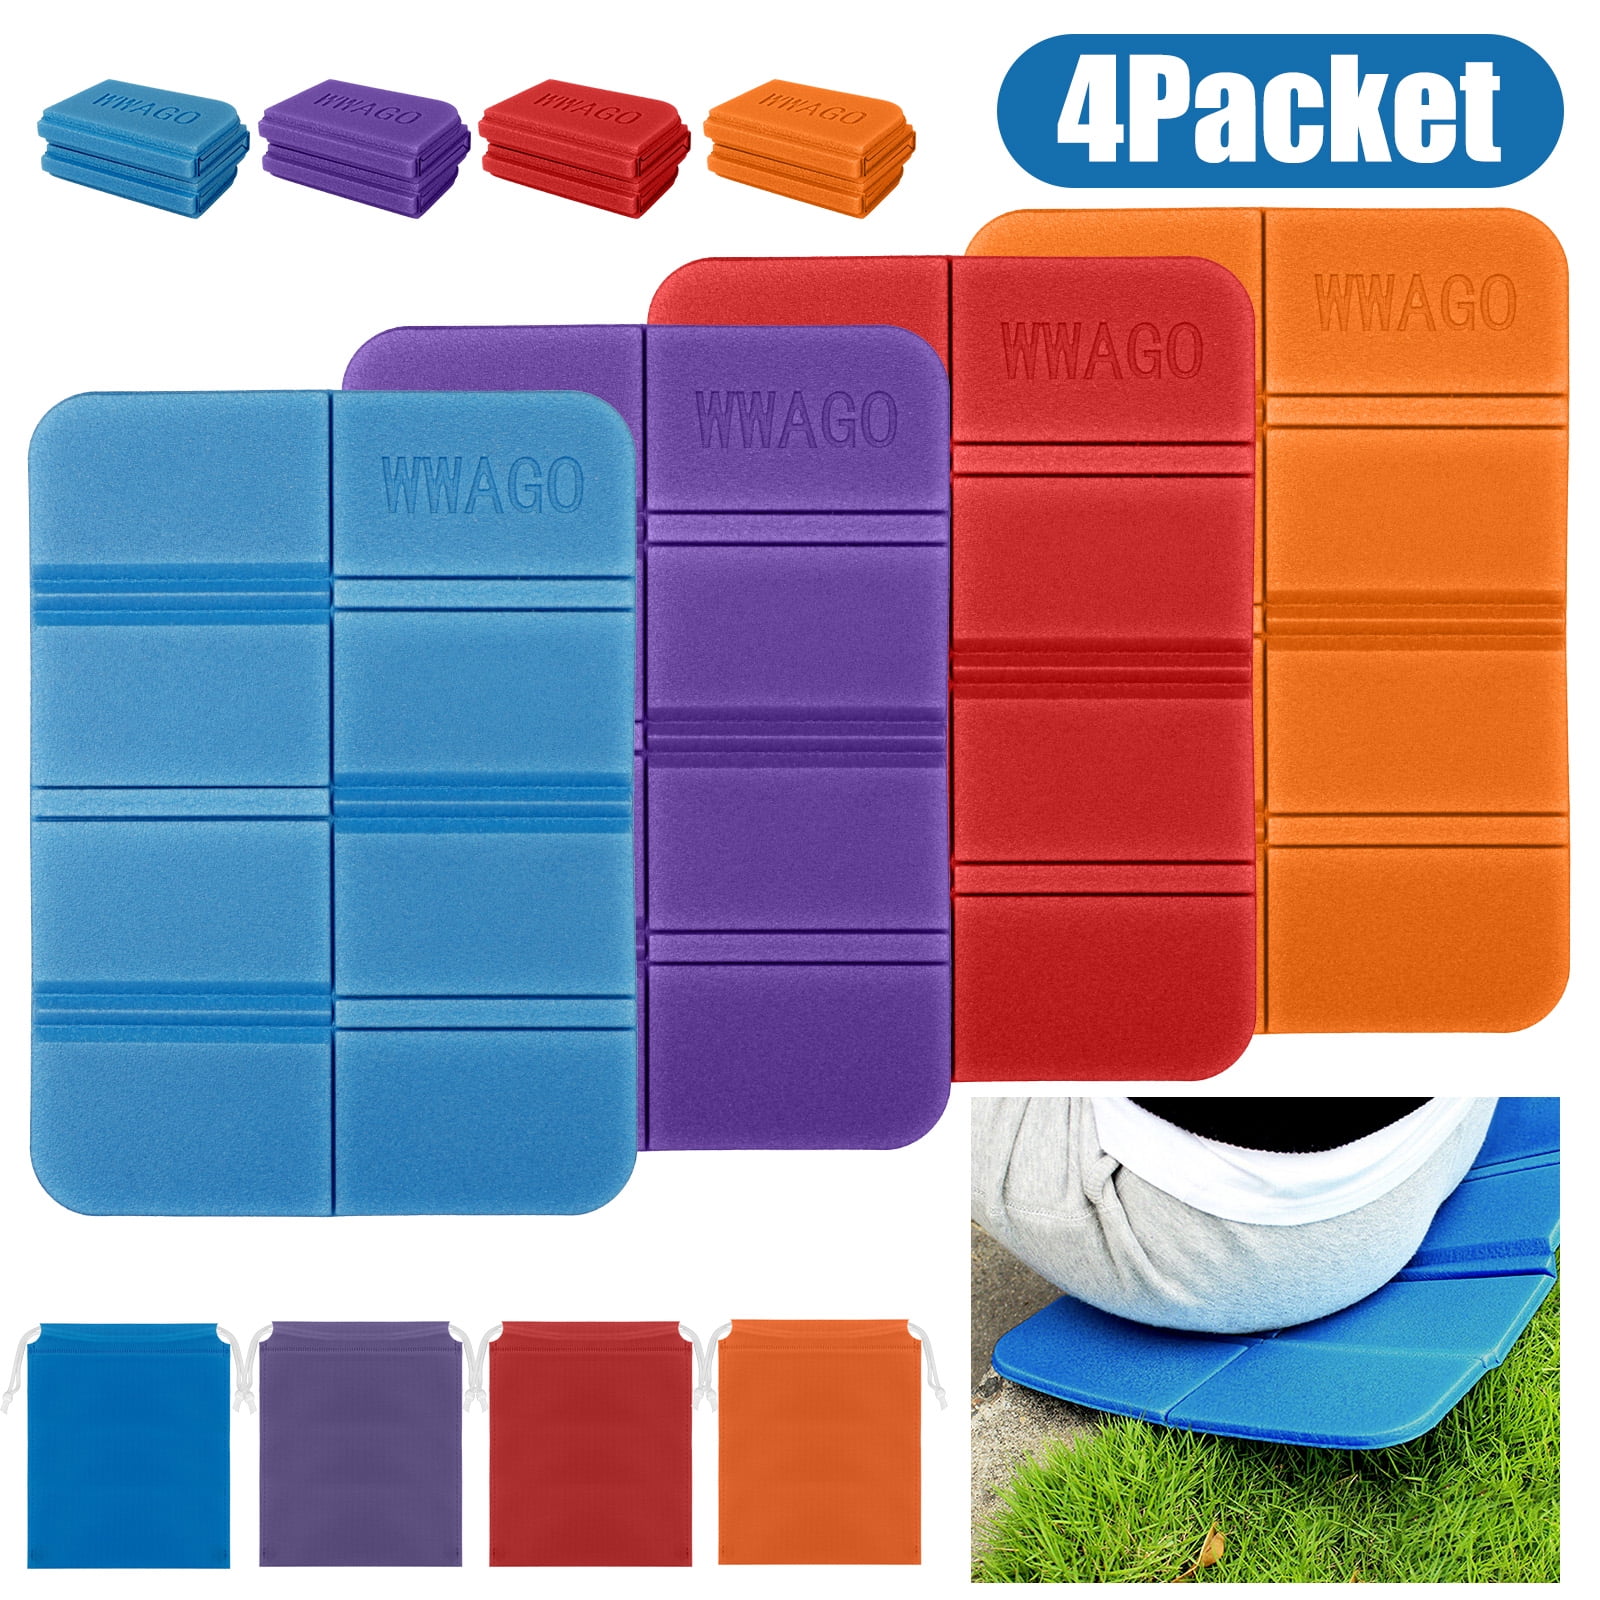 VerPetridure Sit Pad,Camping Portable Foam Seat Pad, Foldable Z